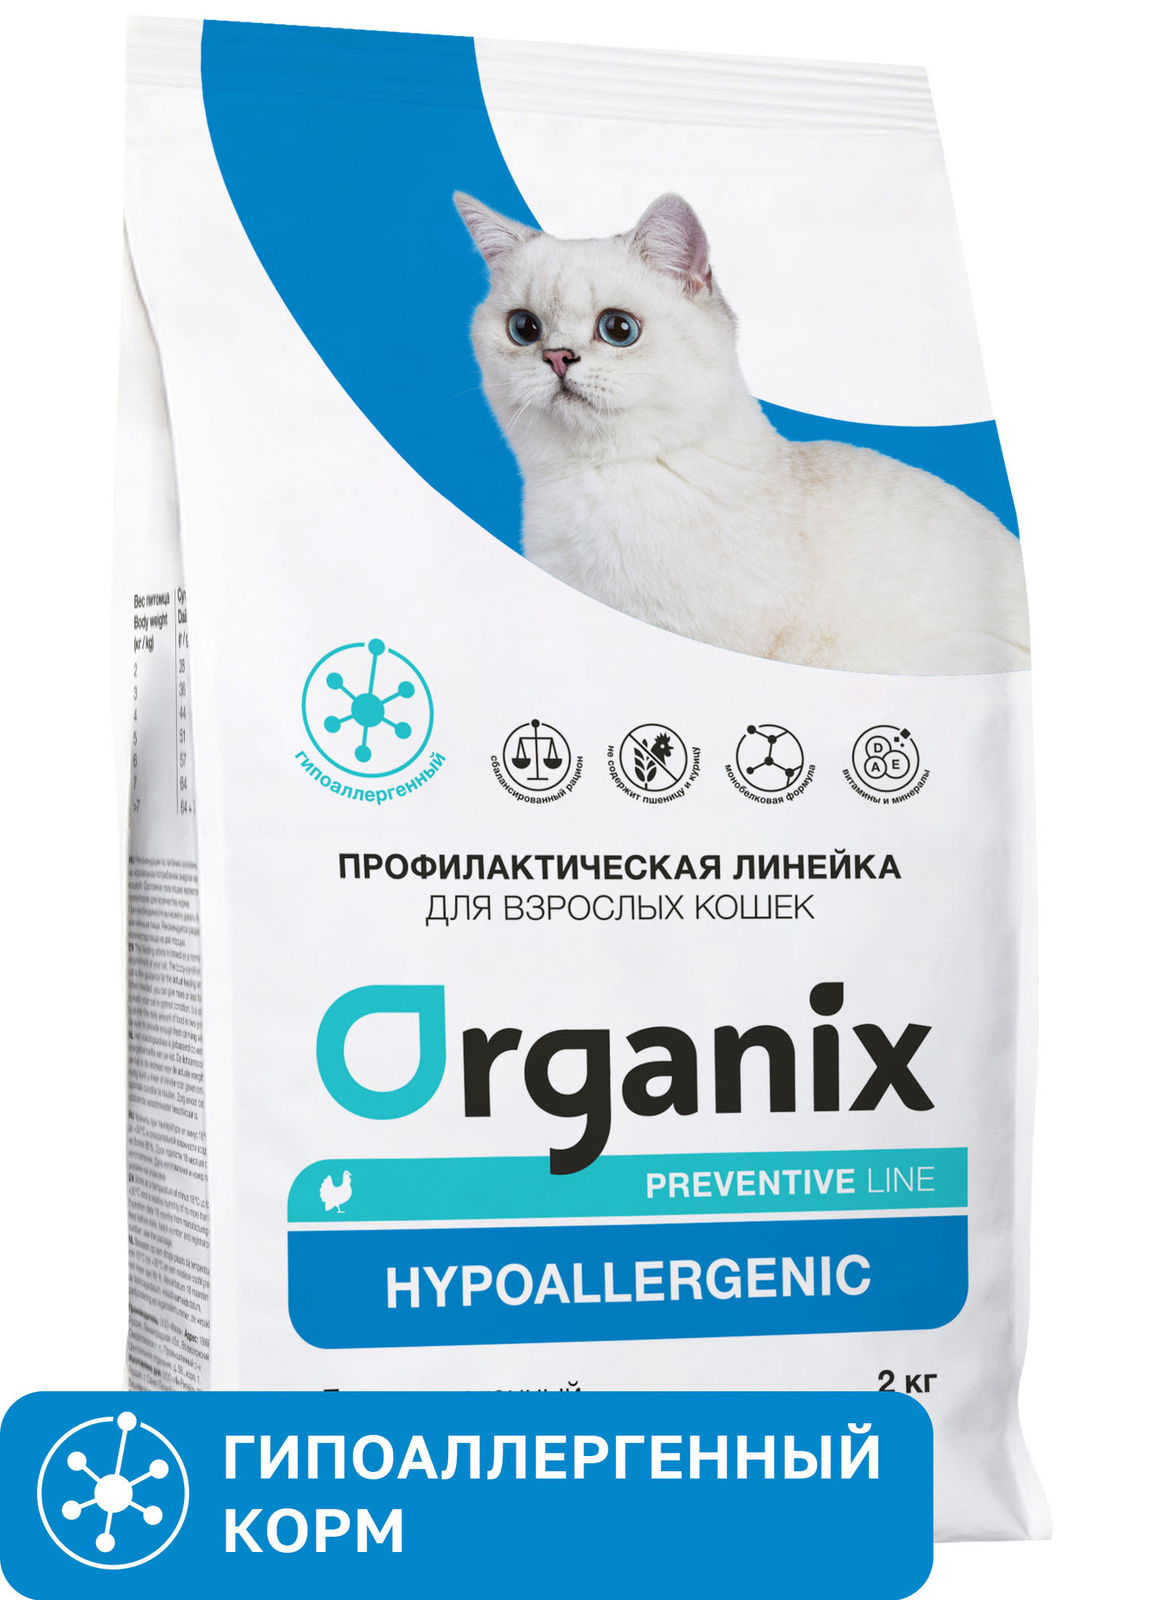 Organix Preventive Line Organix Preventive Line hypoallergenic сухой корм для кошек Гипоаллергенный (600 г) фото